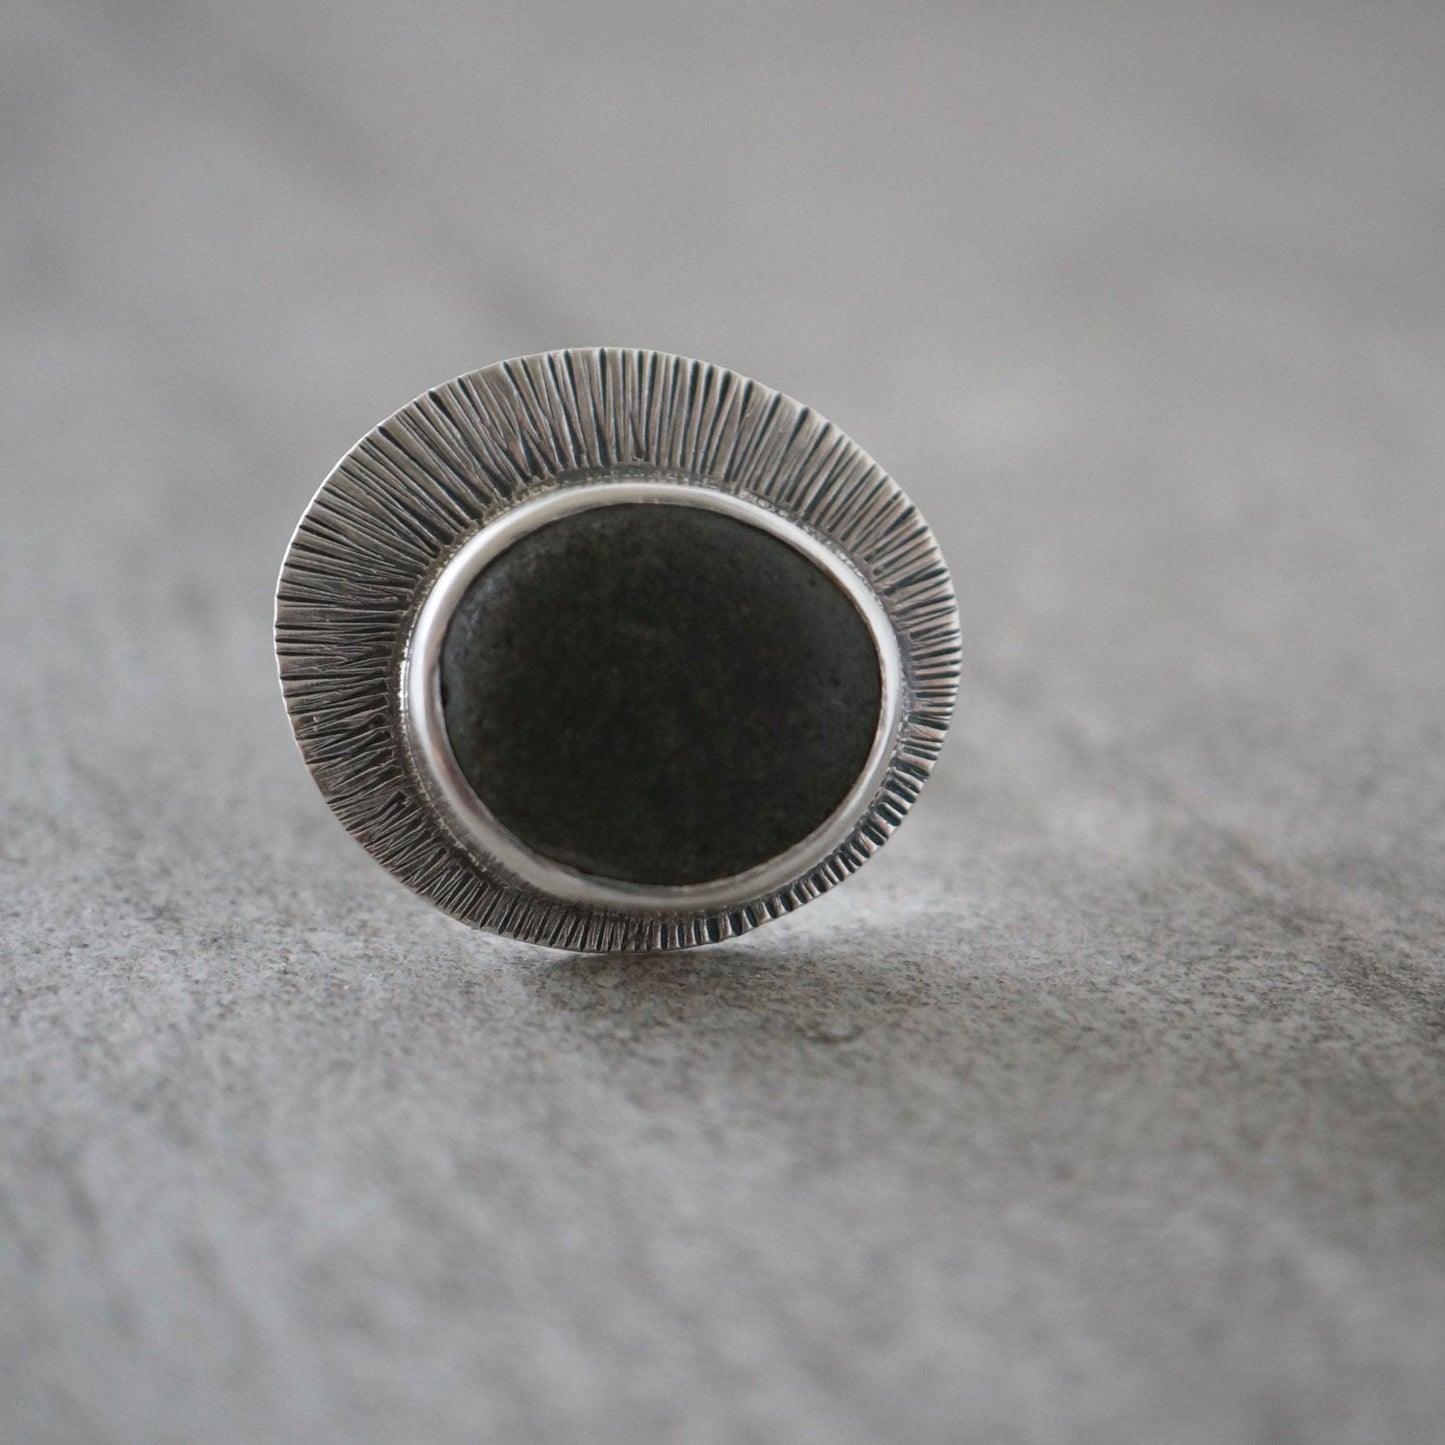 Grey beach pebble statement ring, size 5.25